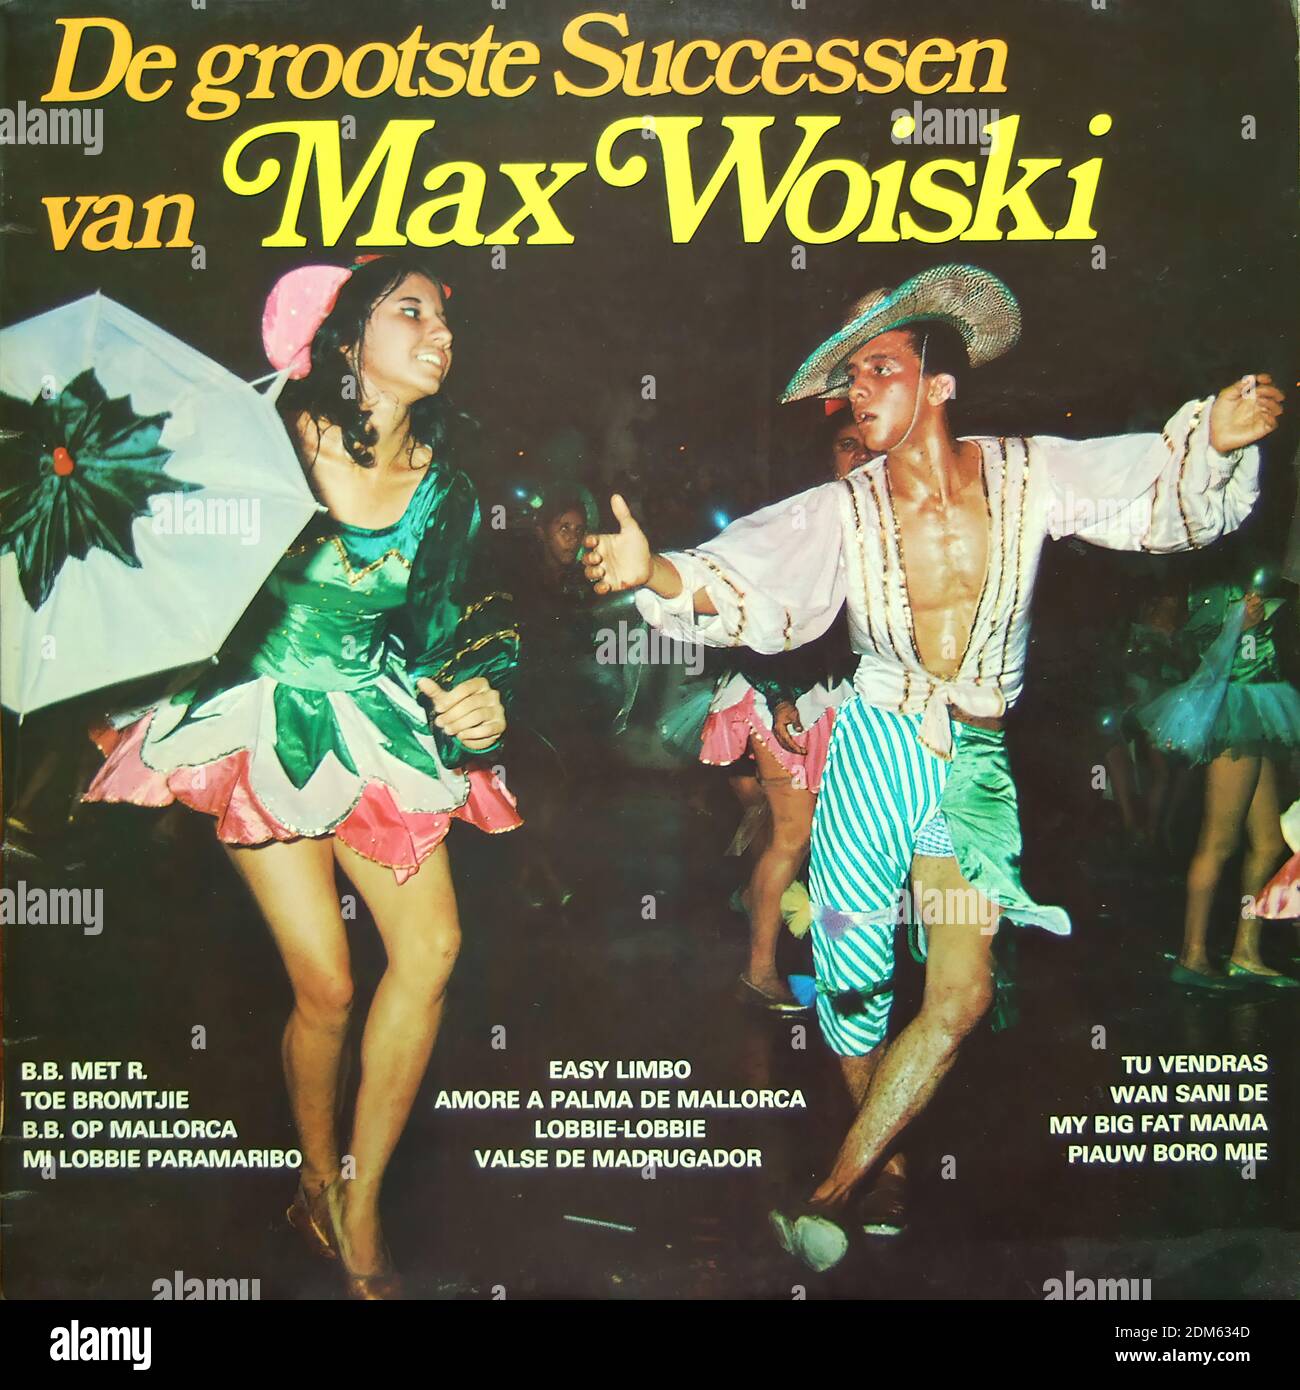 Max Woiski - De Grootste Successen van Max Woiski, Polydor 2454 016 - copertina di un album in vinile d'epoca Foto Stock